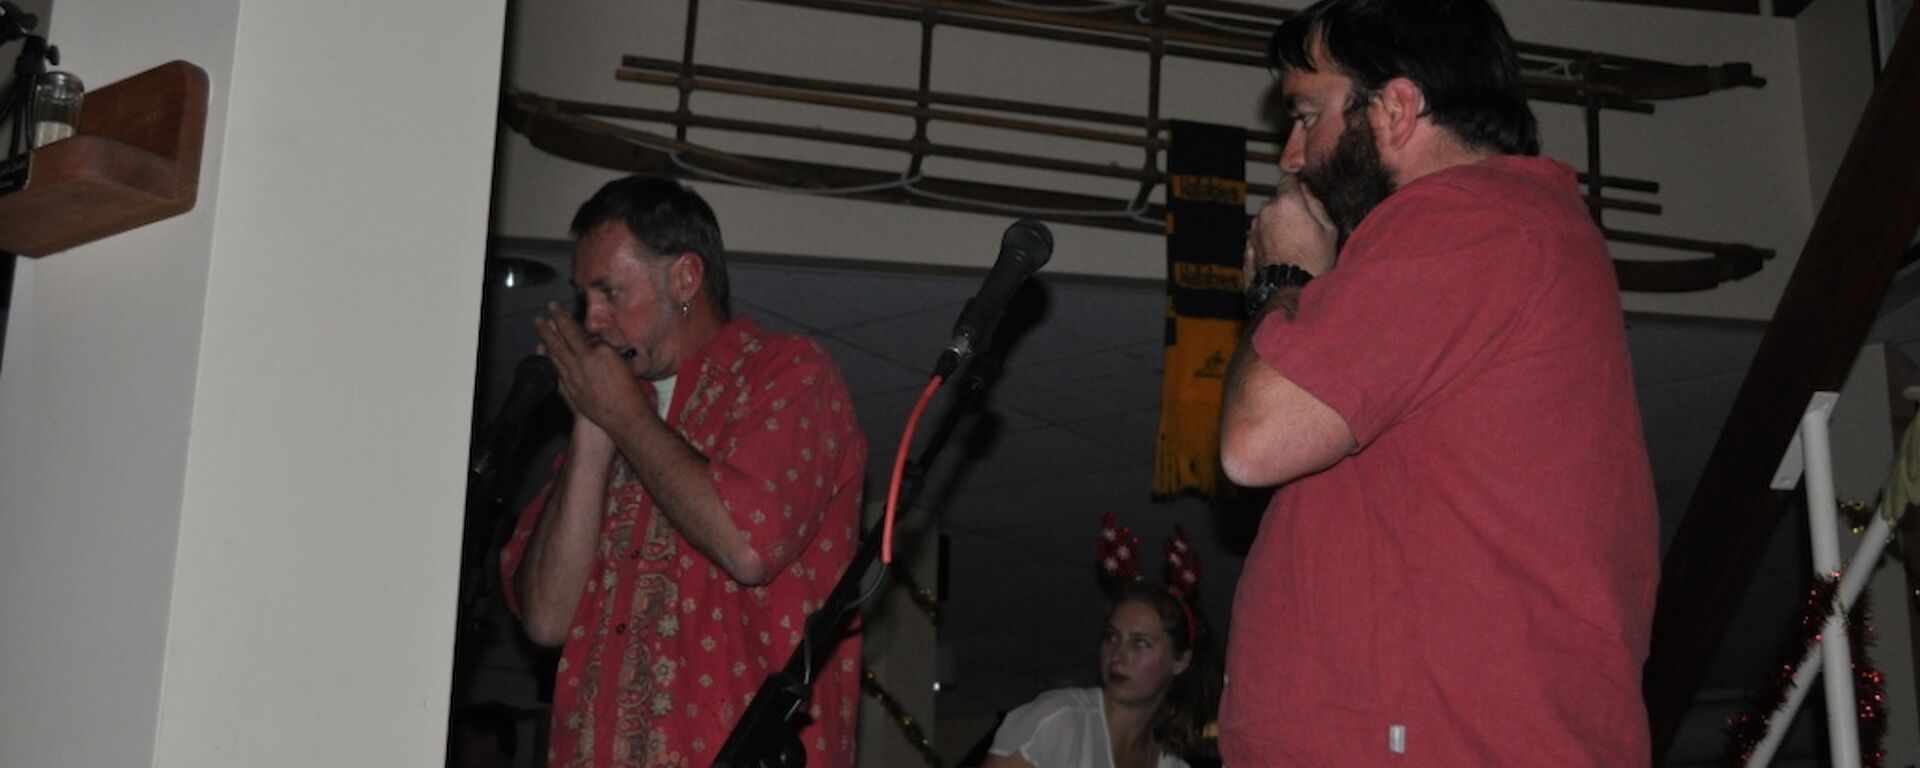 Tim and Jeb on the harmonicas